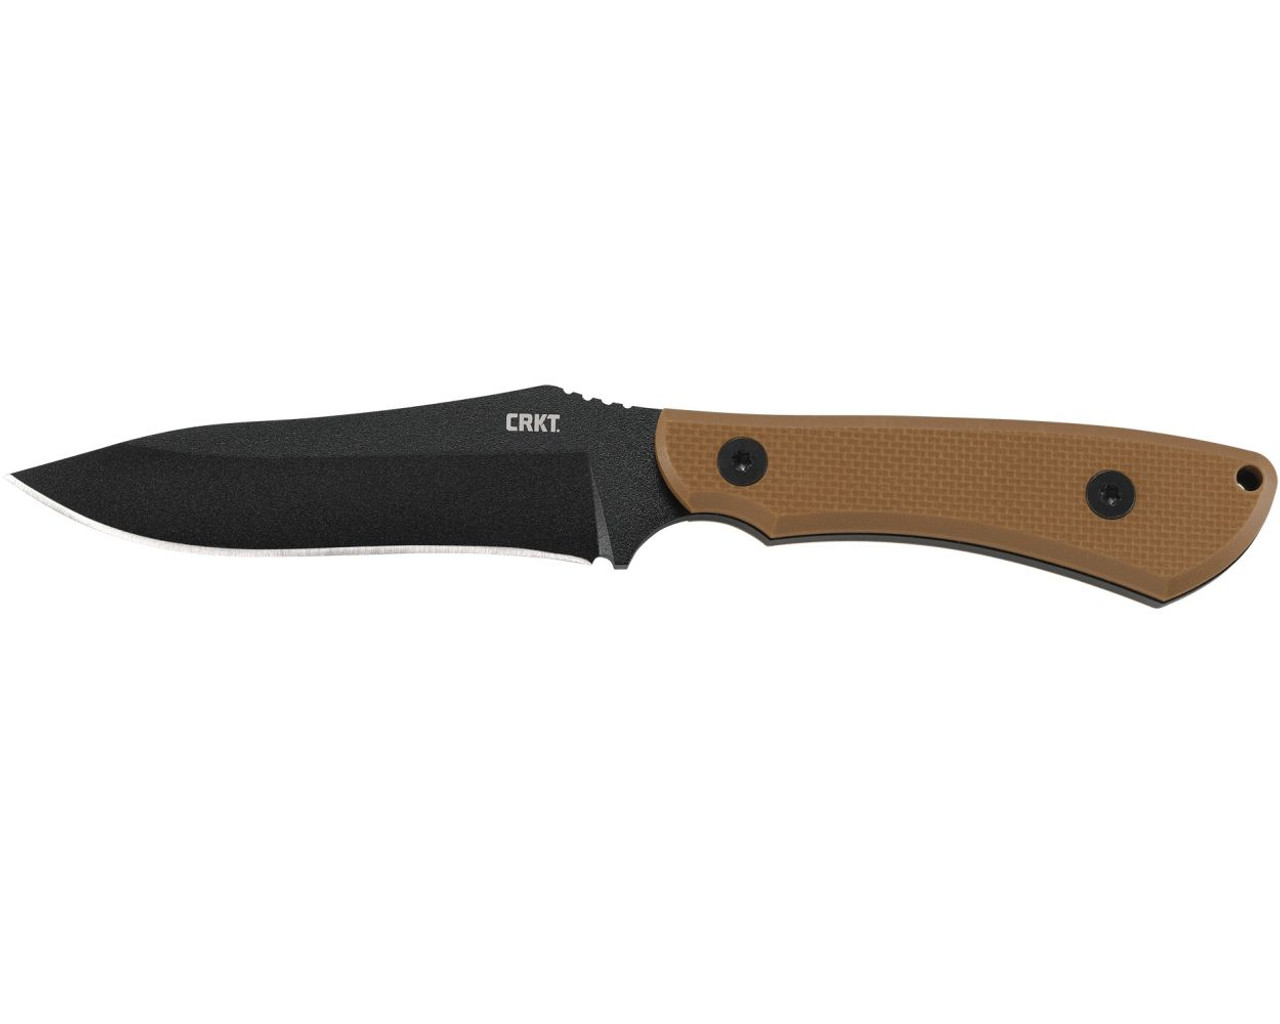 CRKT Ramadi Fixed Blade Knife, 4.37" Heavy-Duty Full Tang Blade, Sk-5 Carbon Steel, G10 Handle, W/ Versatile Sheath